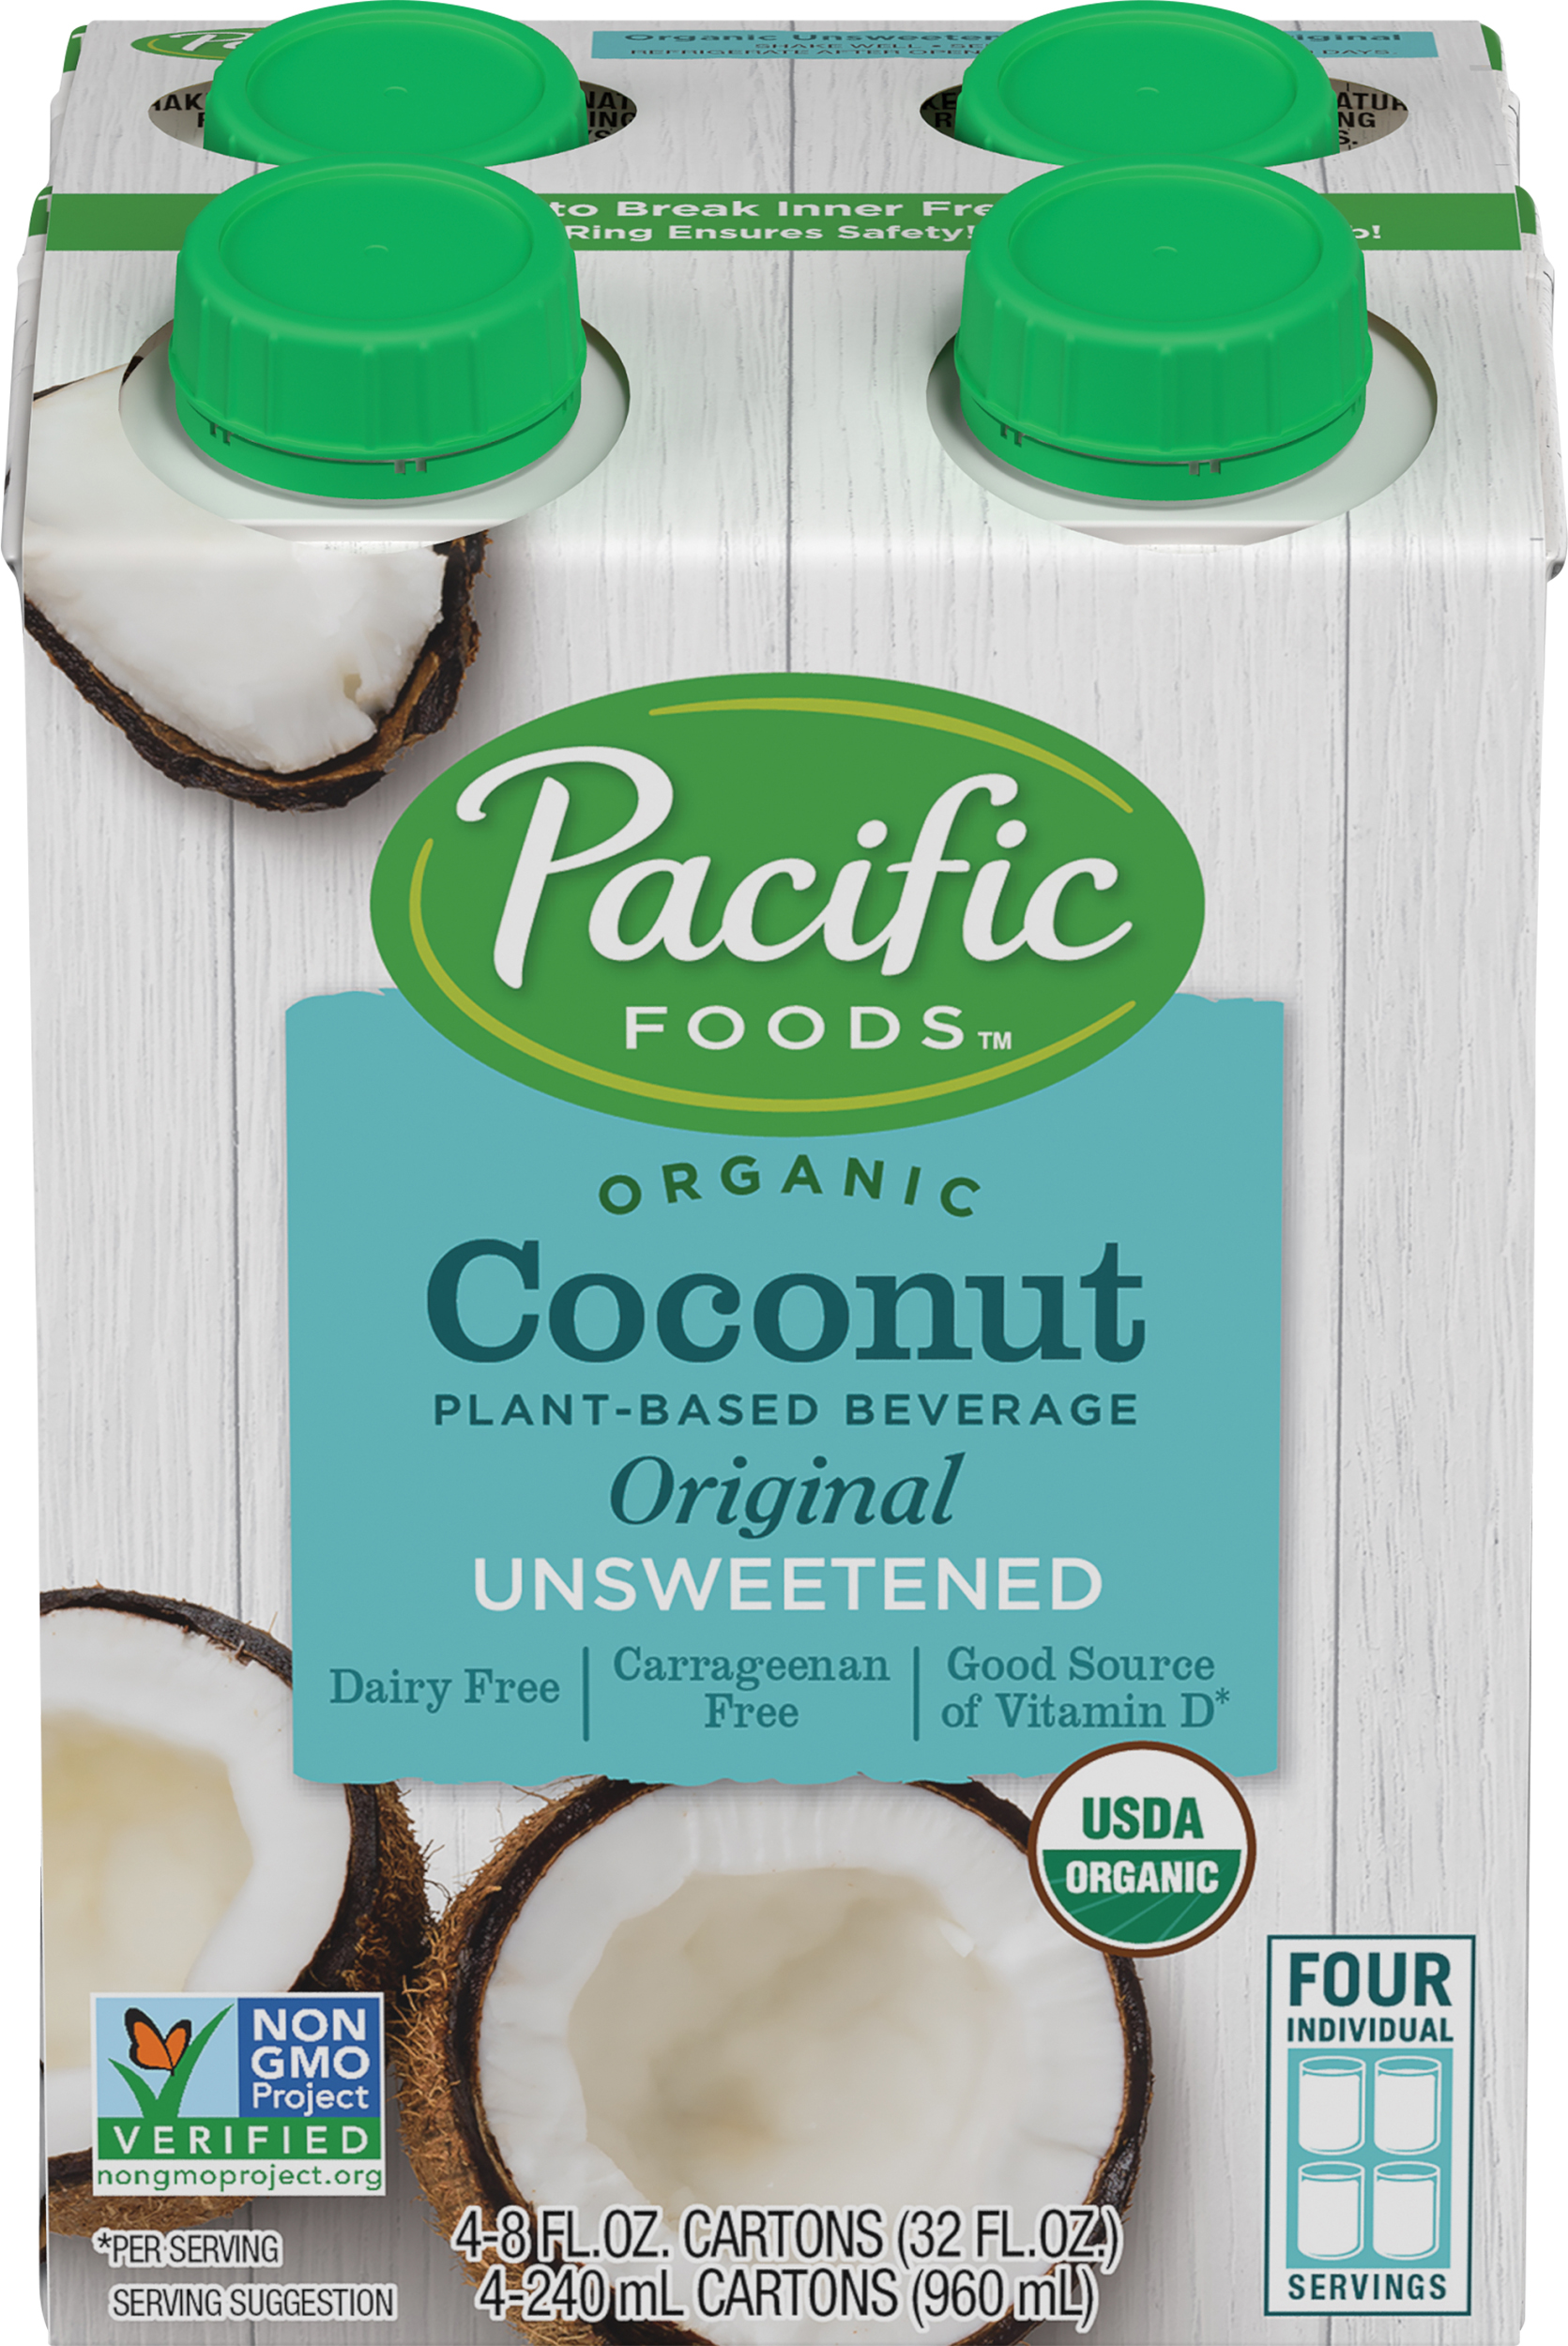 Coconut Beverage, Organic, Plant-Based, Original, Unsweetened, 4 Pack image